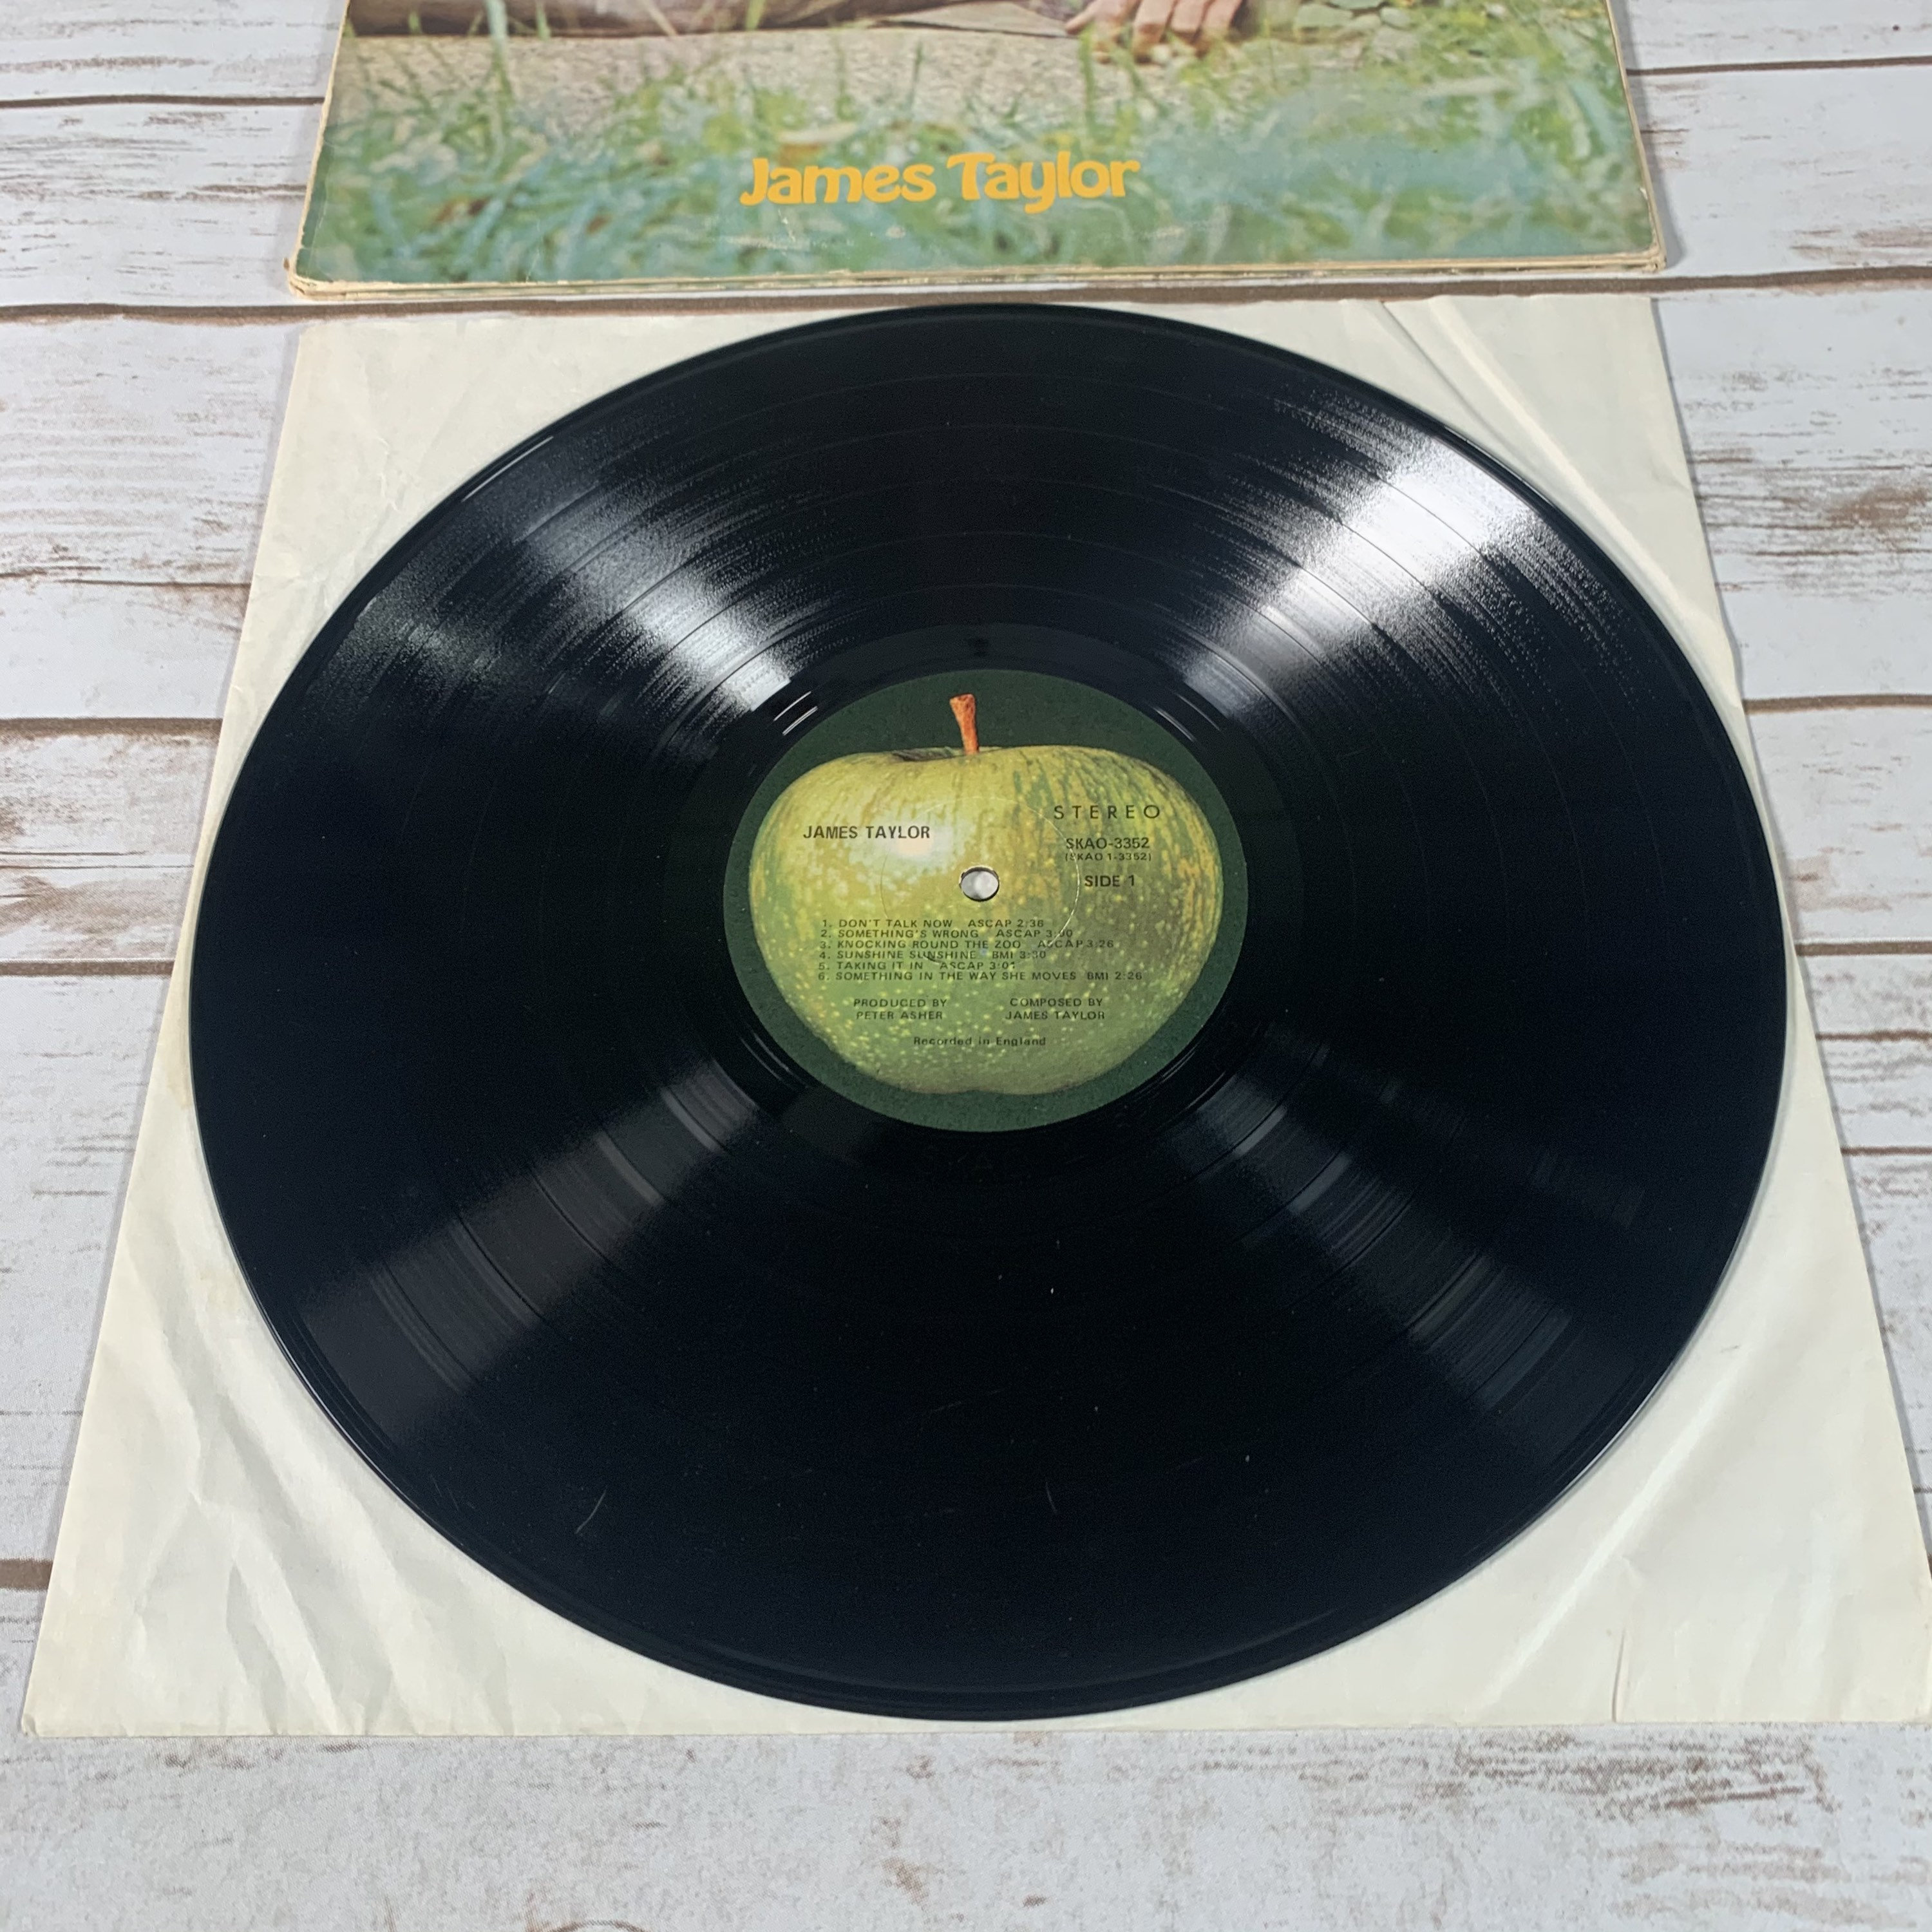 James Taylor Self titled album 1969 vintage vinyl record | Etsy